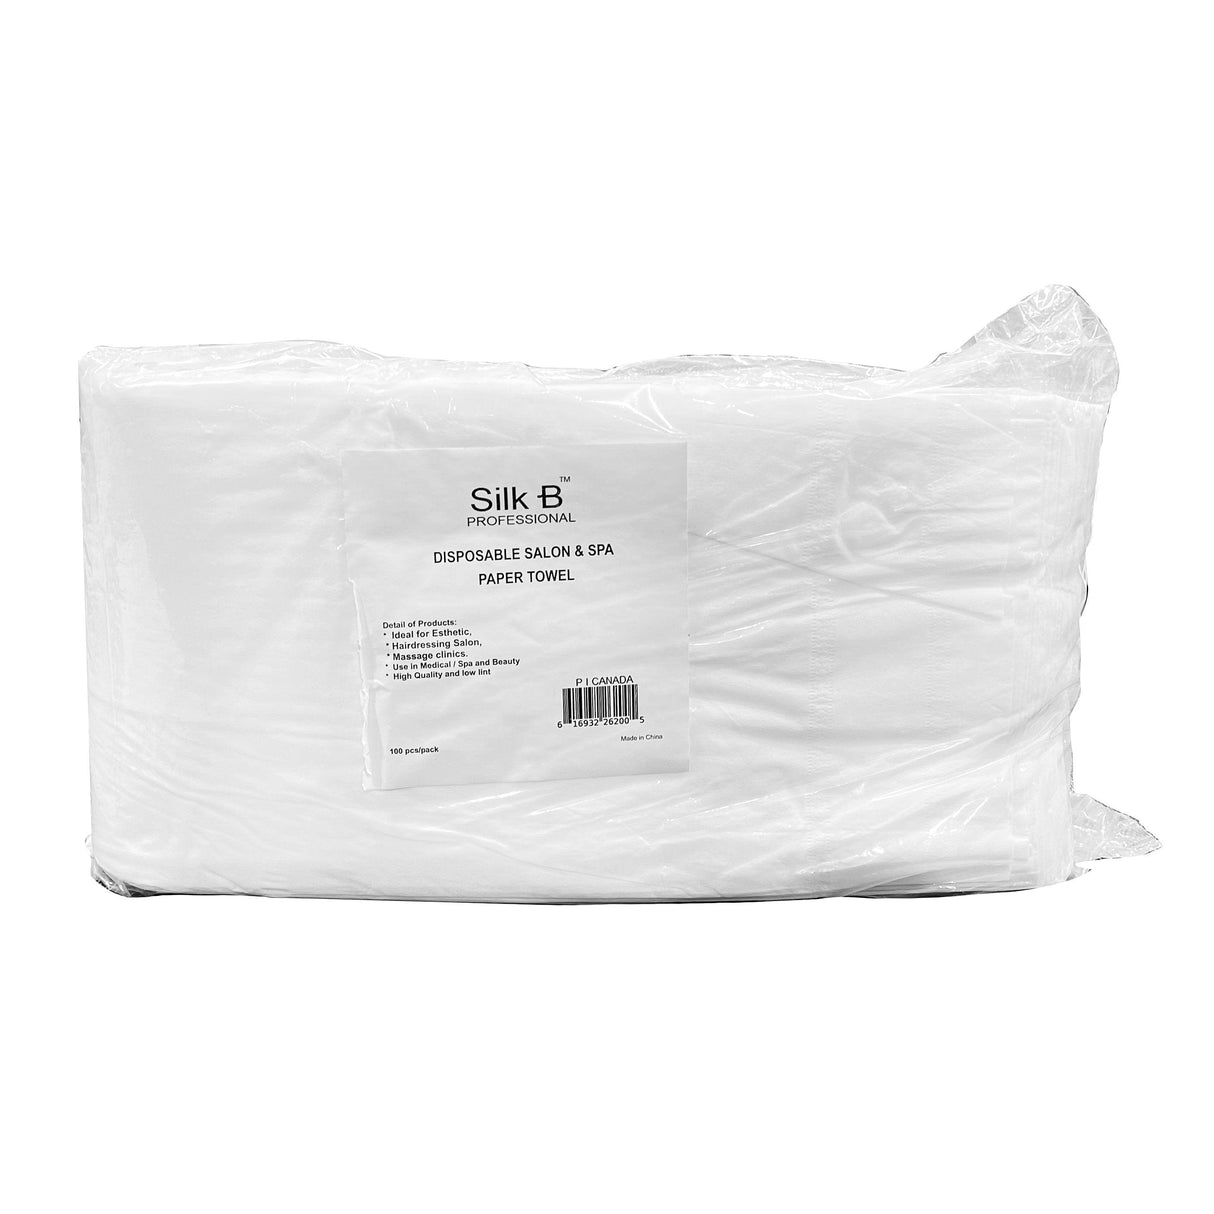 Silk B - Disposable Salon & Spa Paper Towel - 100pc/pack - Jessica Nail & Beauty Supply - Canada Nail Beauty Supply - Towel